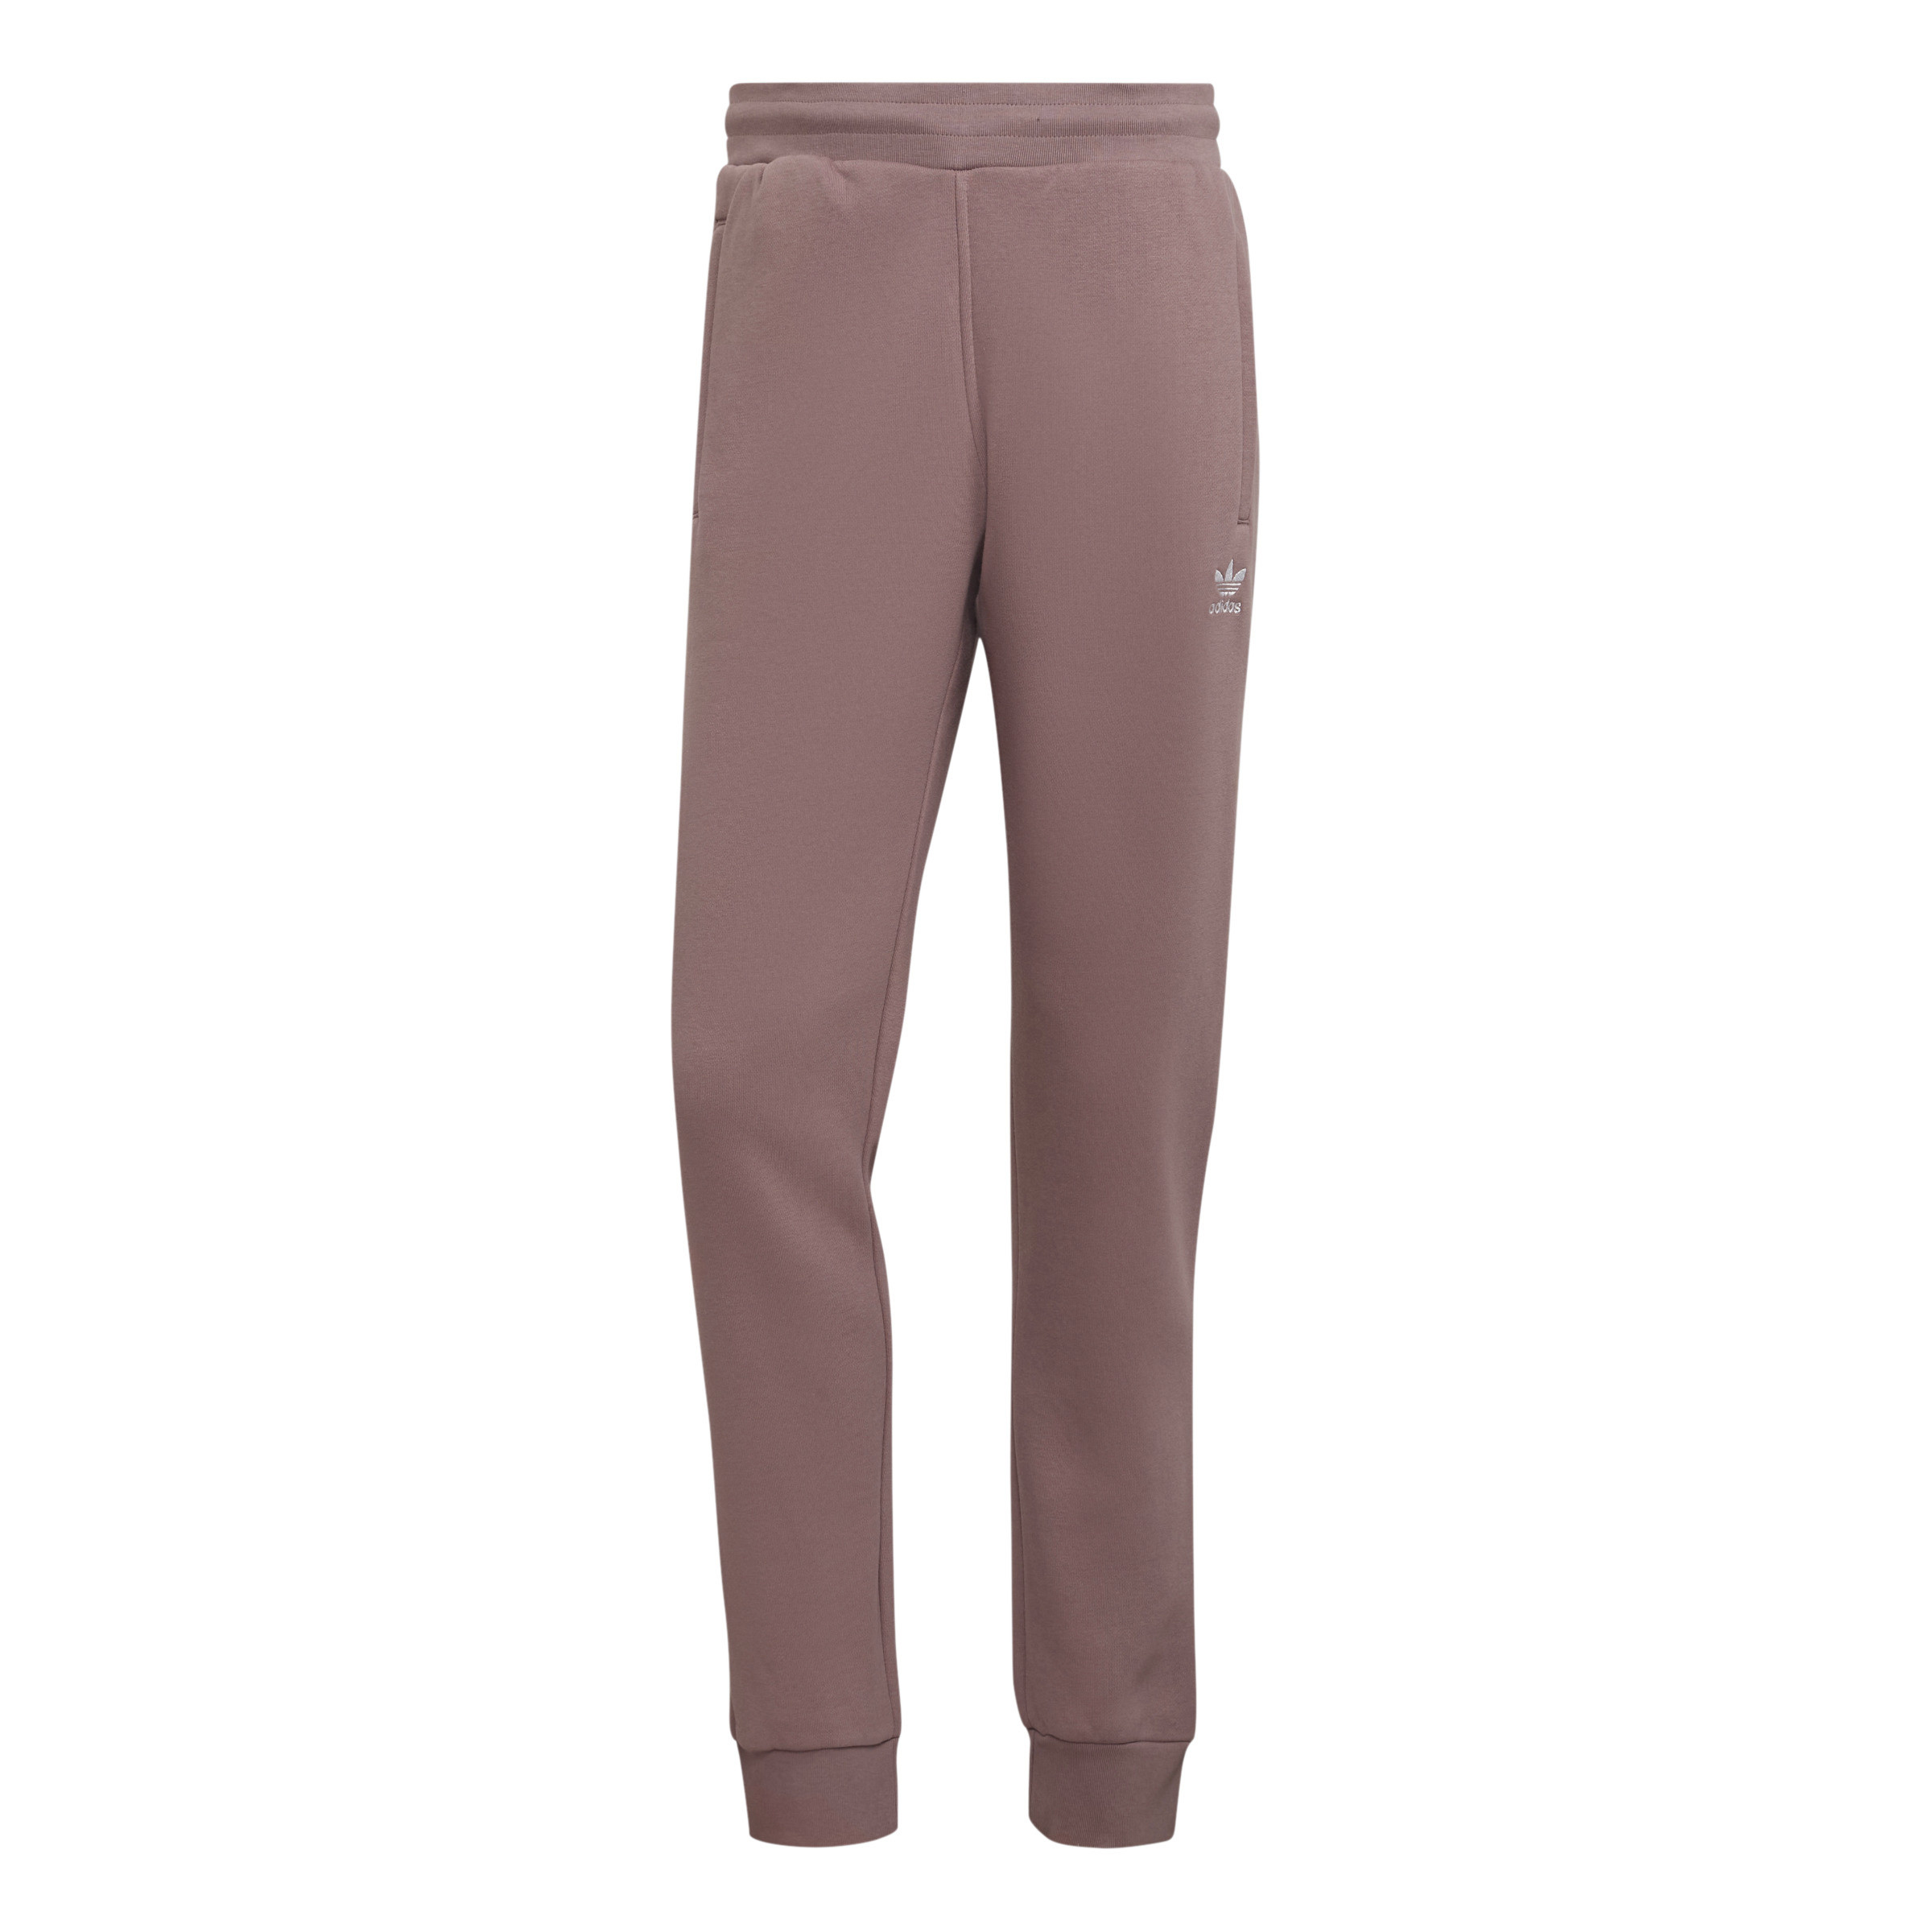 Adidas - Adicolor Essentials Trefoil Pants, Antique Pink, large image number 0